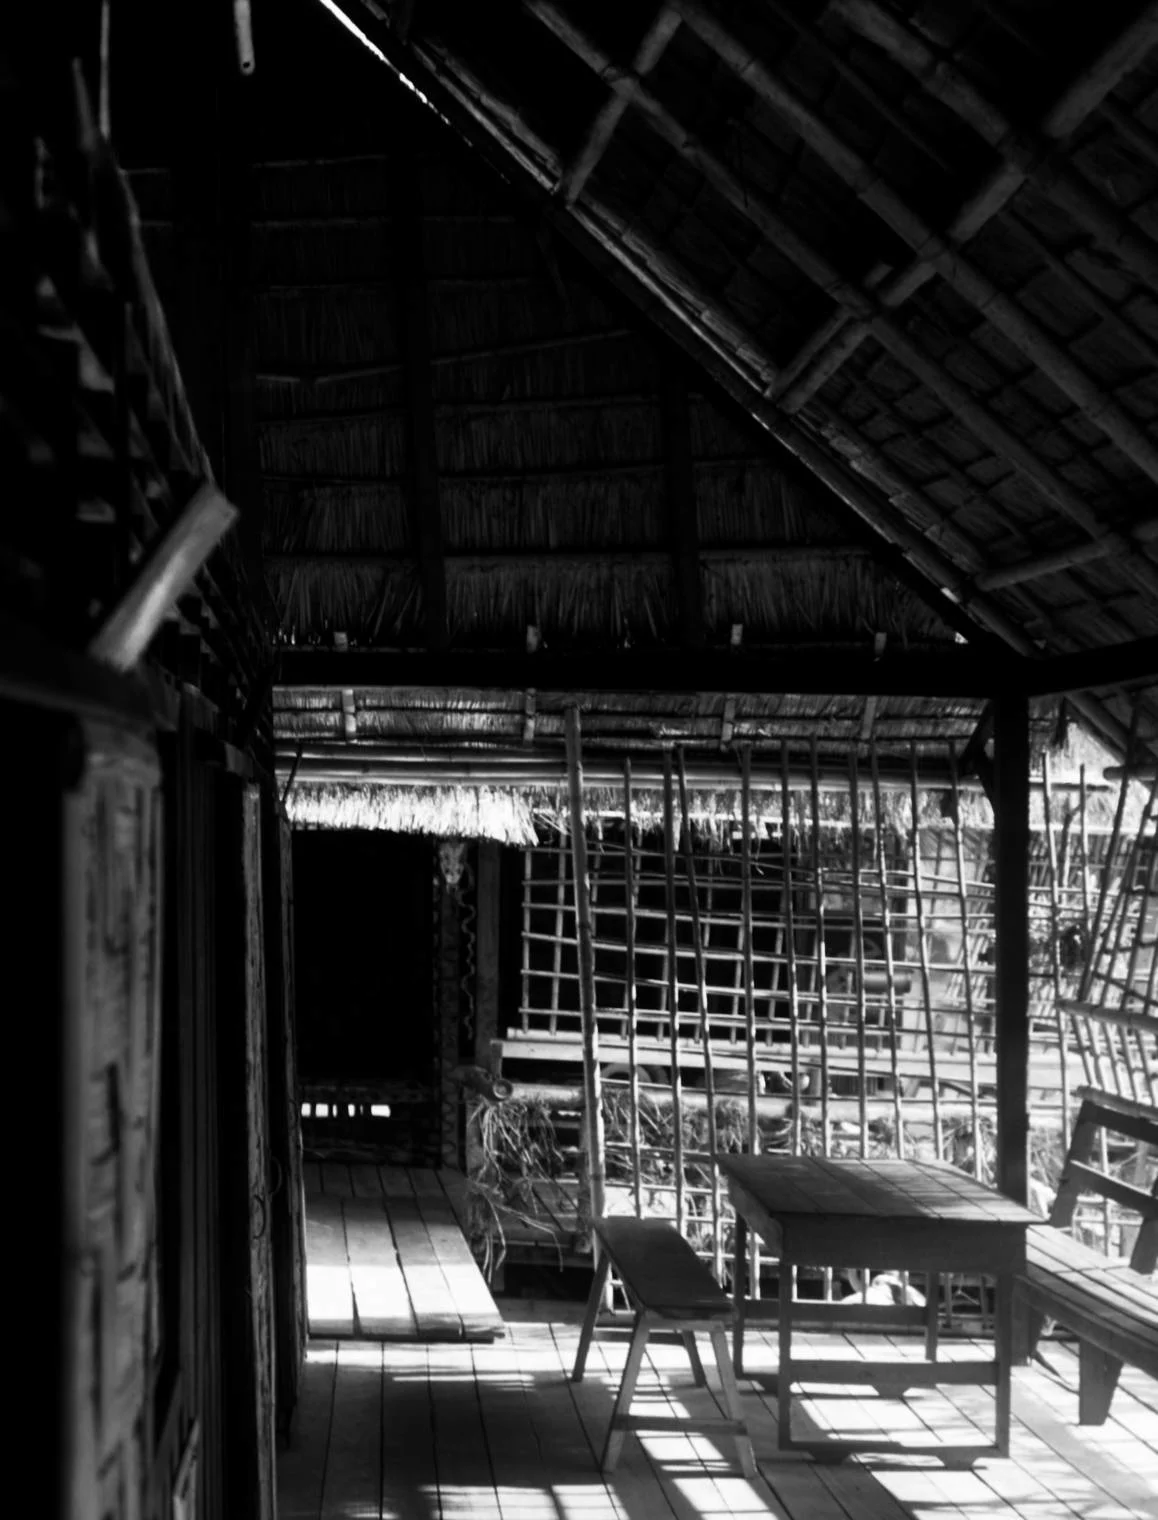 teak and bamboo interior, raft house, river kwai